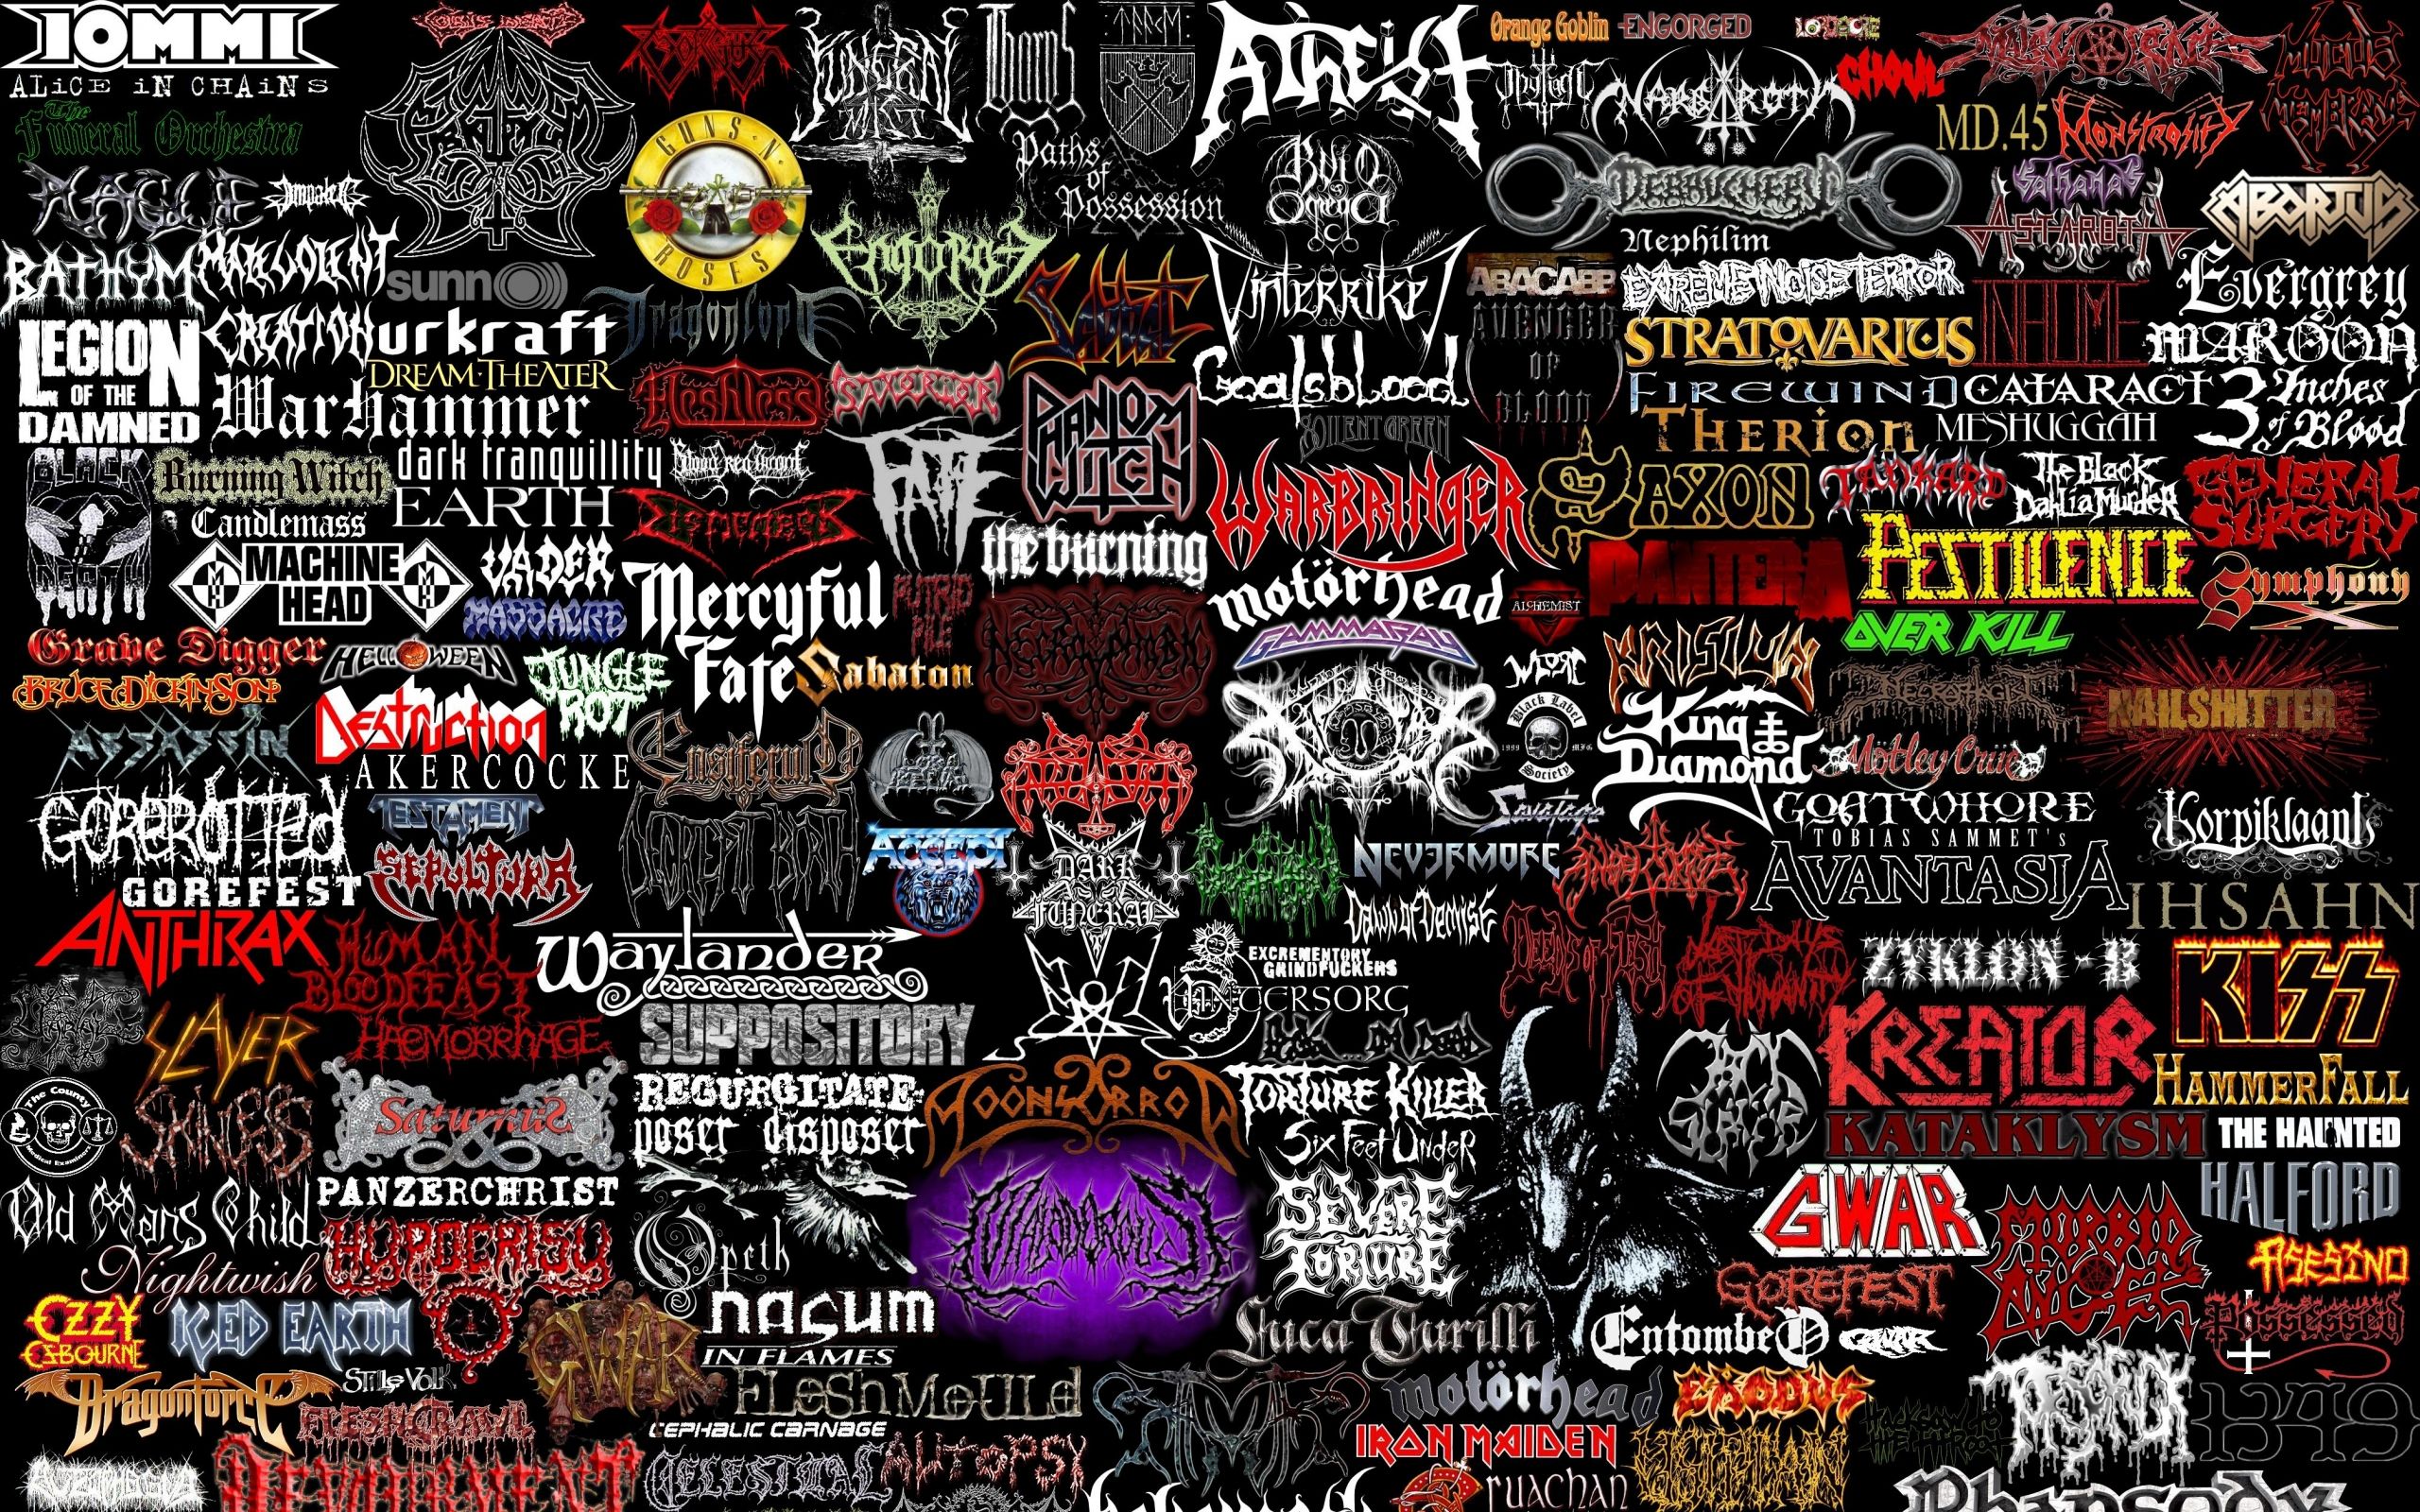 Wallpaper.wiki Slayer Band Desktop Background PIC WPD005080